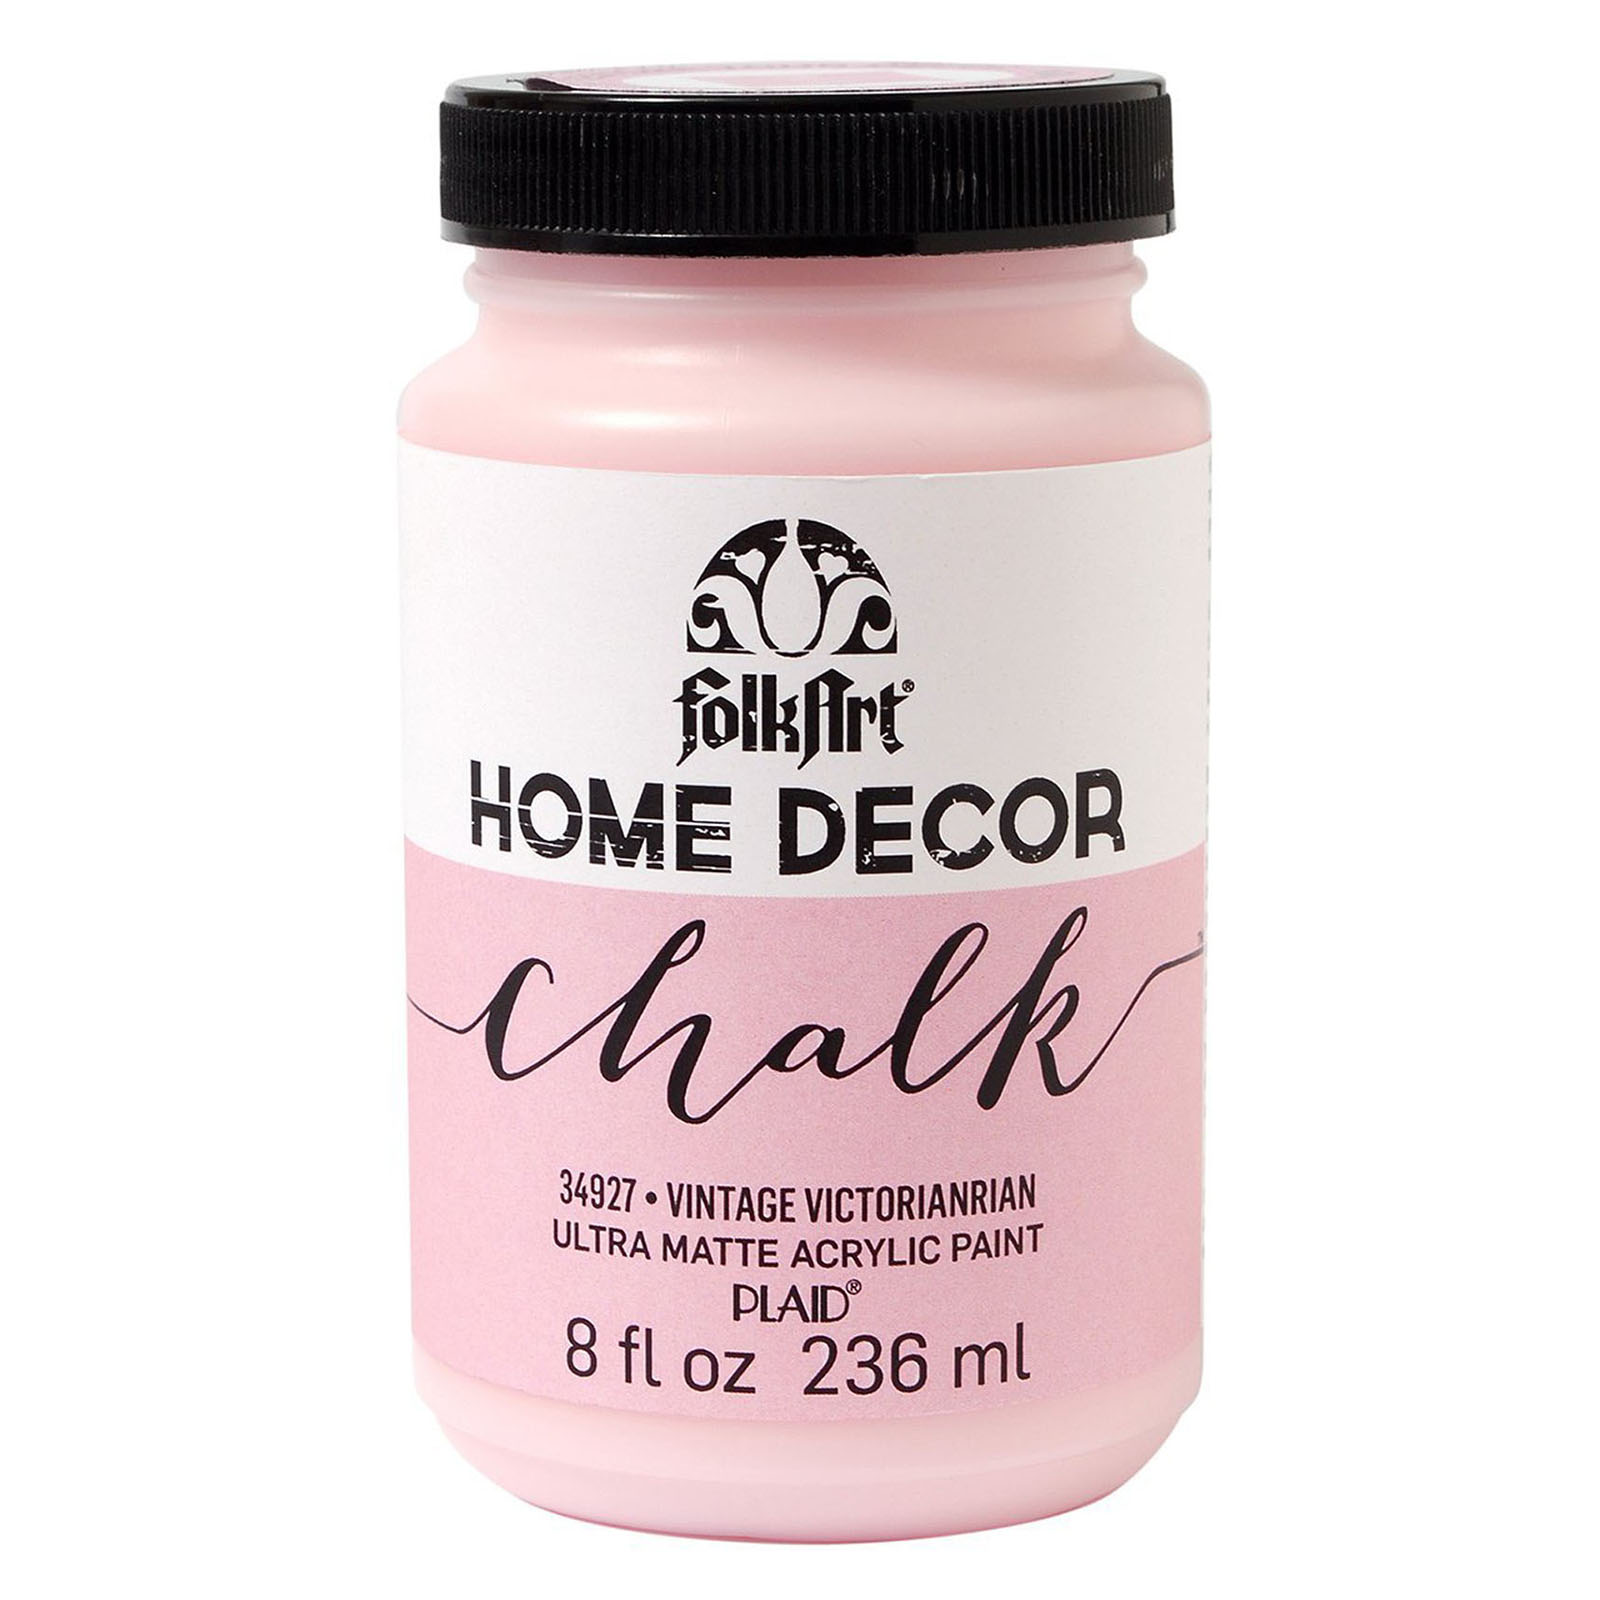 FolkArt • Home Decor chalk Vintage victorian 236ml